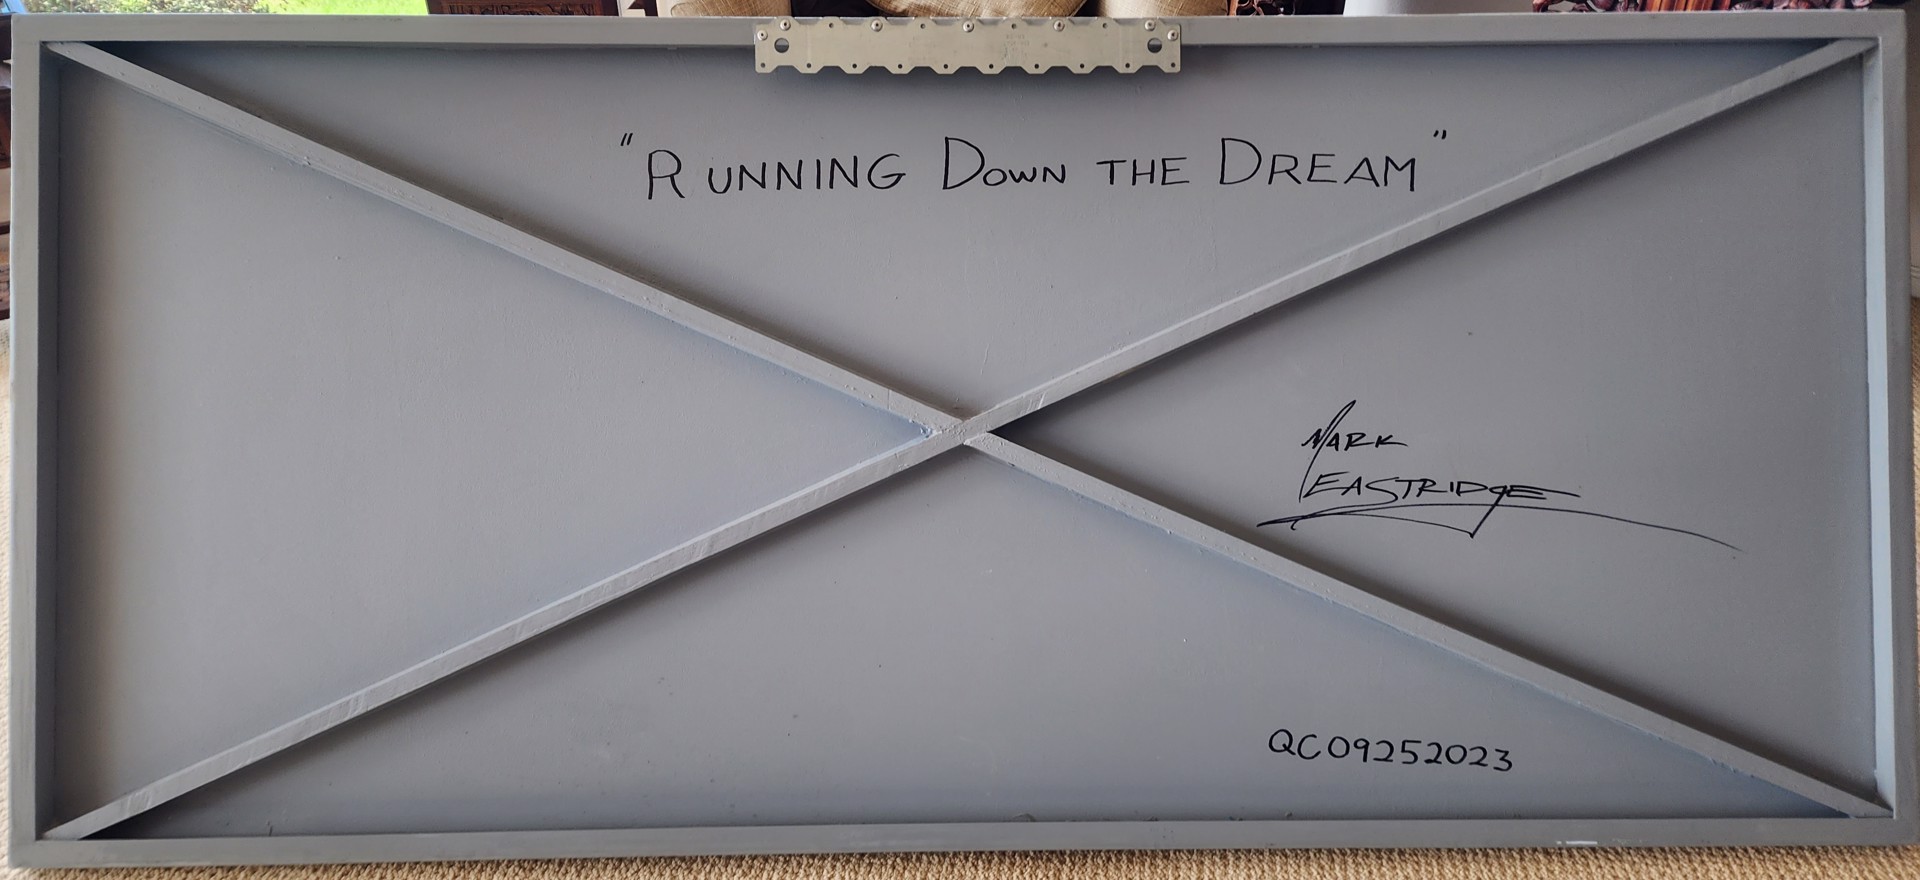 Running Down the Dream by Mark Eastridge